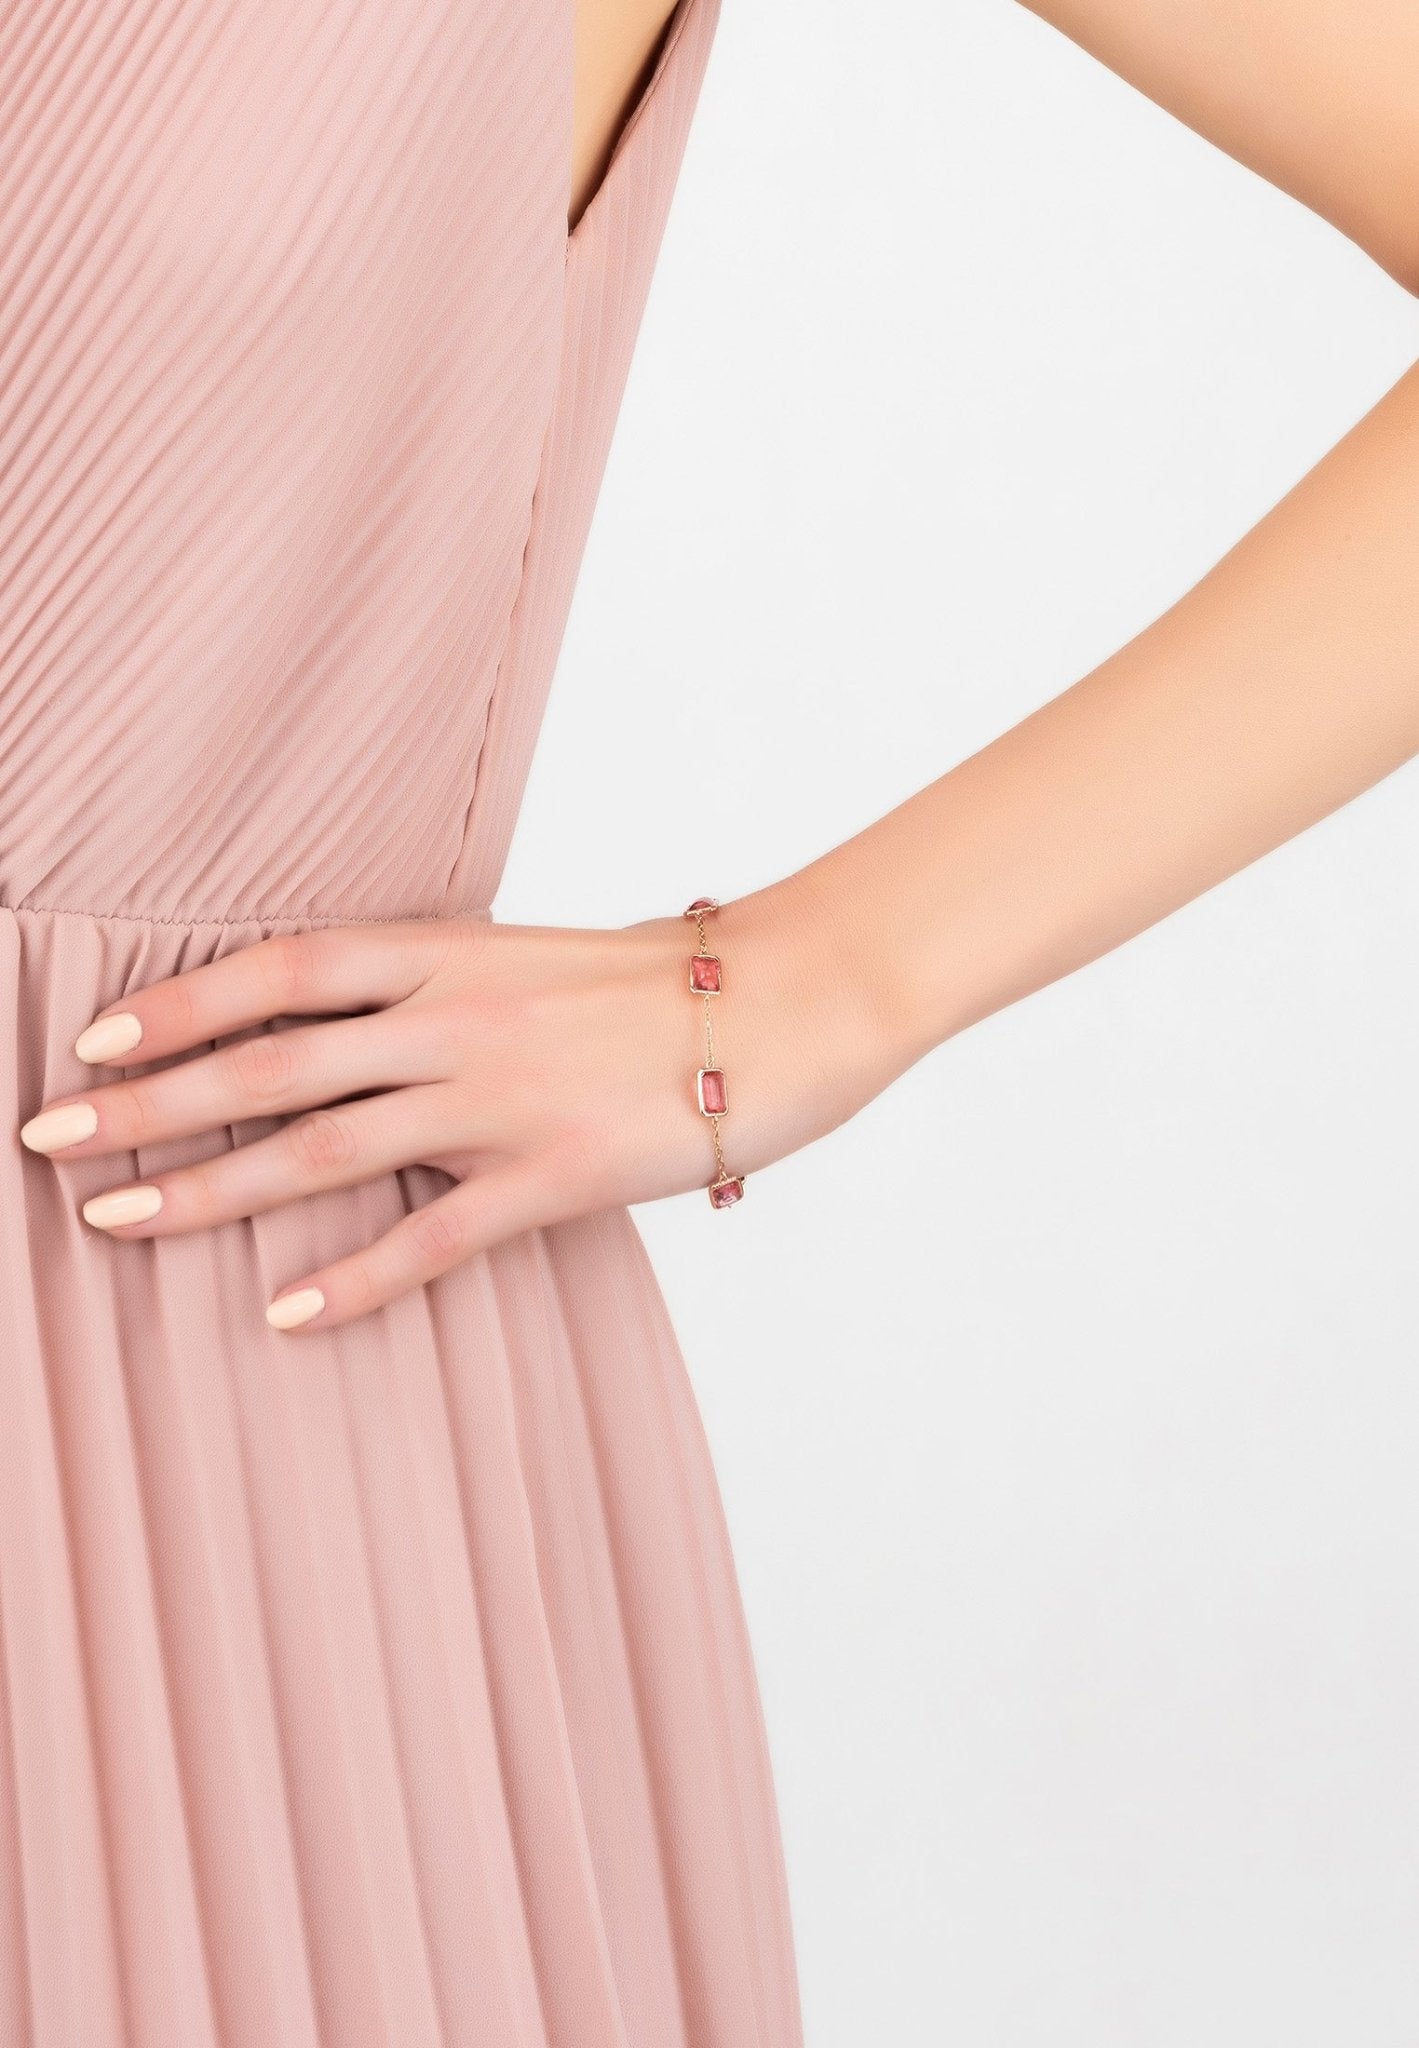 Portofino Bracelet Rose Gold Pink Tourmaline - LATELITA Bracelets